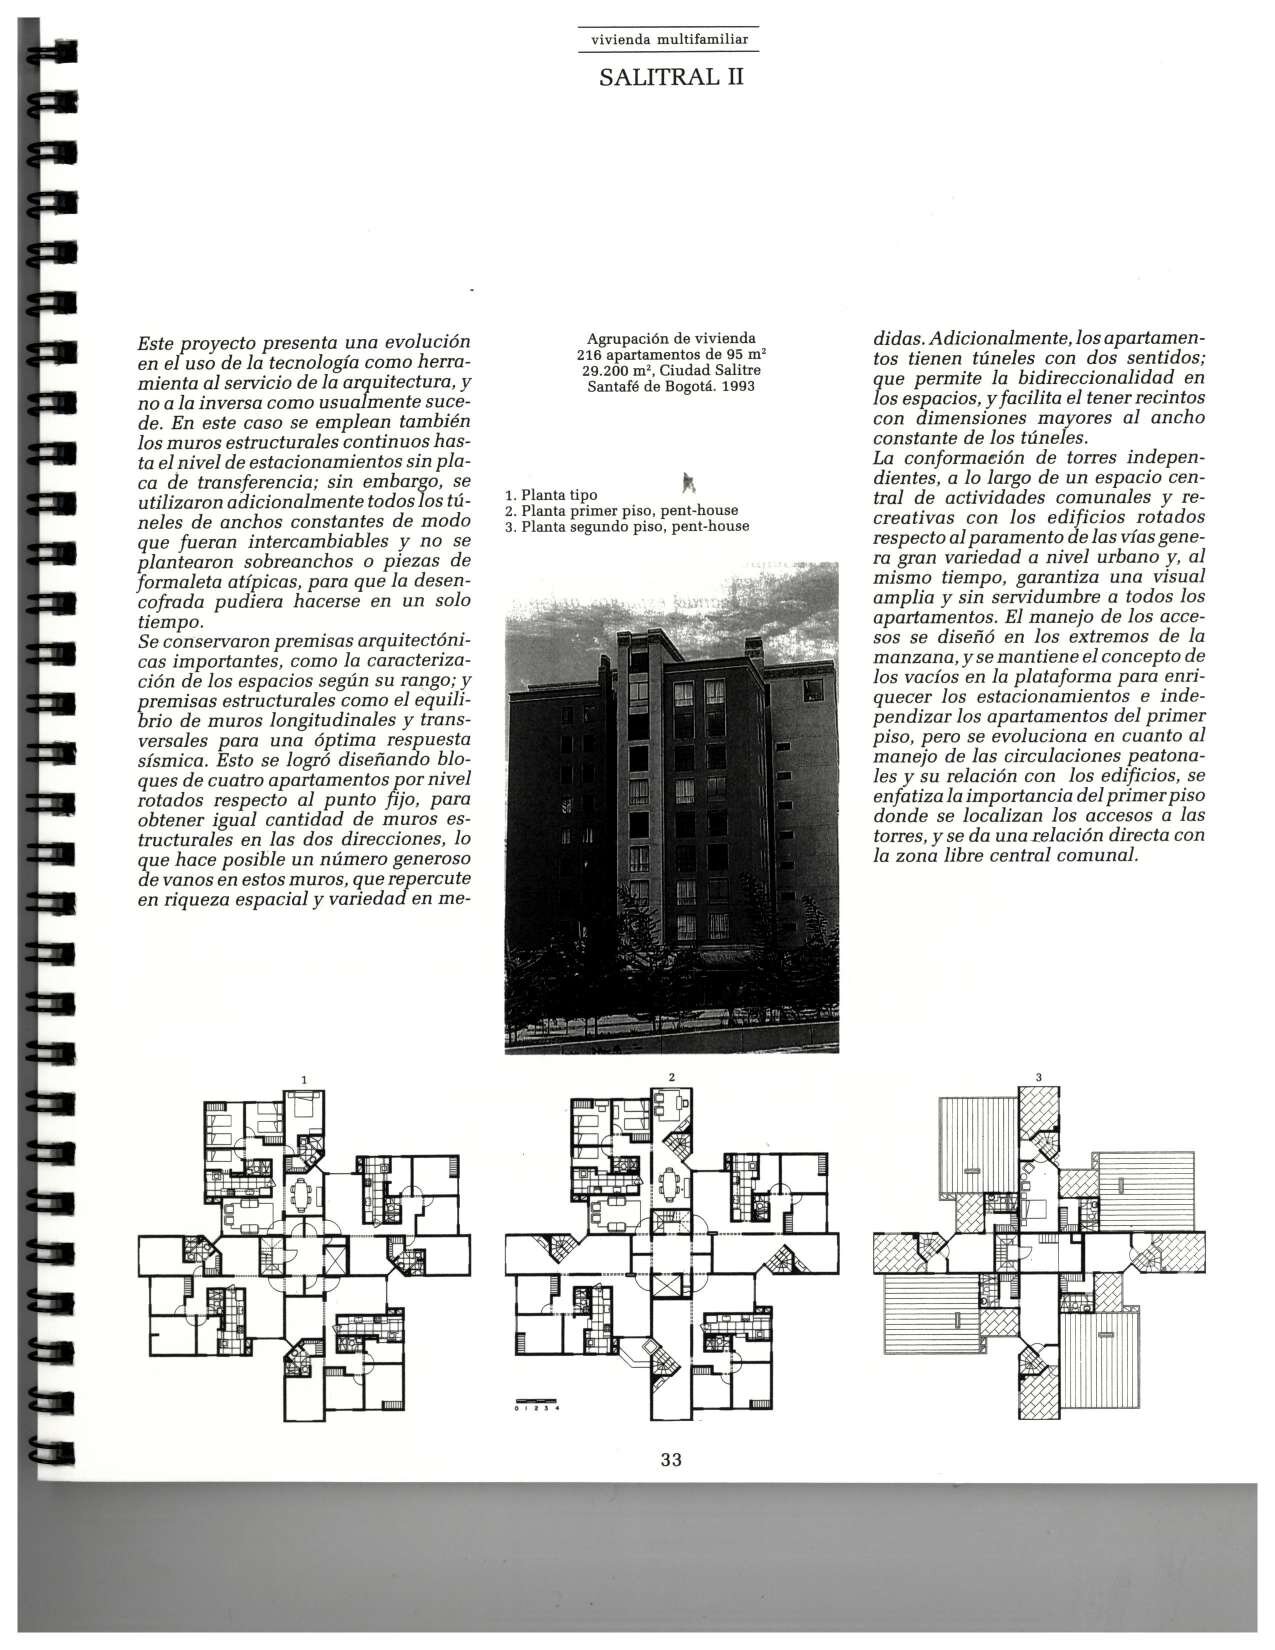 1995_Obra Contexto Urbano_Revista PROA_compressed_page-0033.jpg